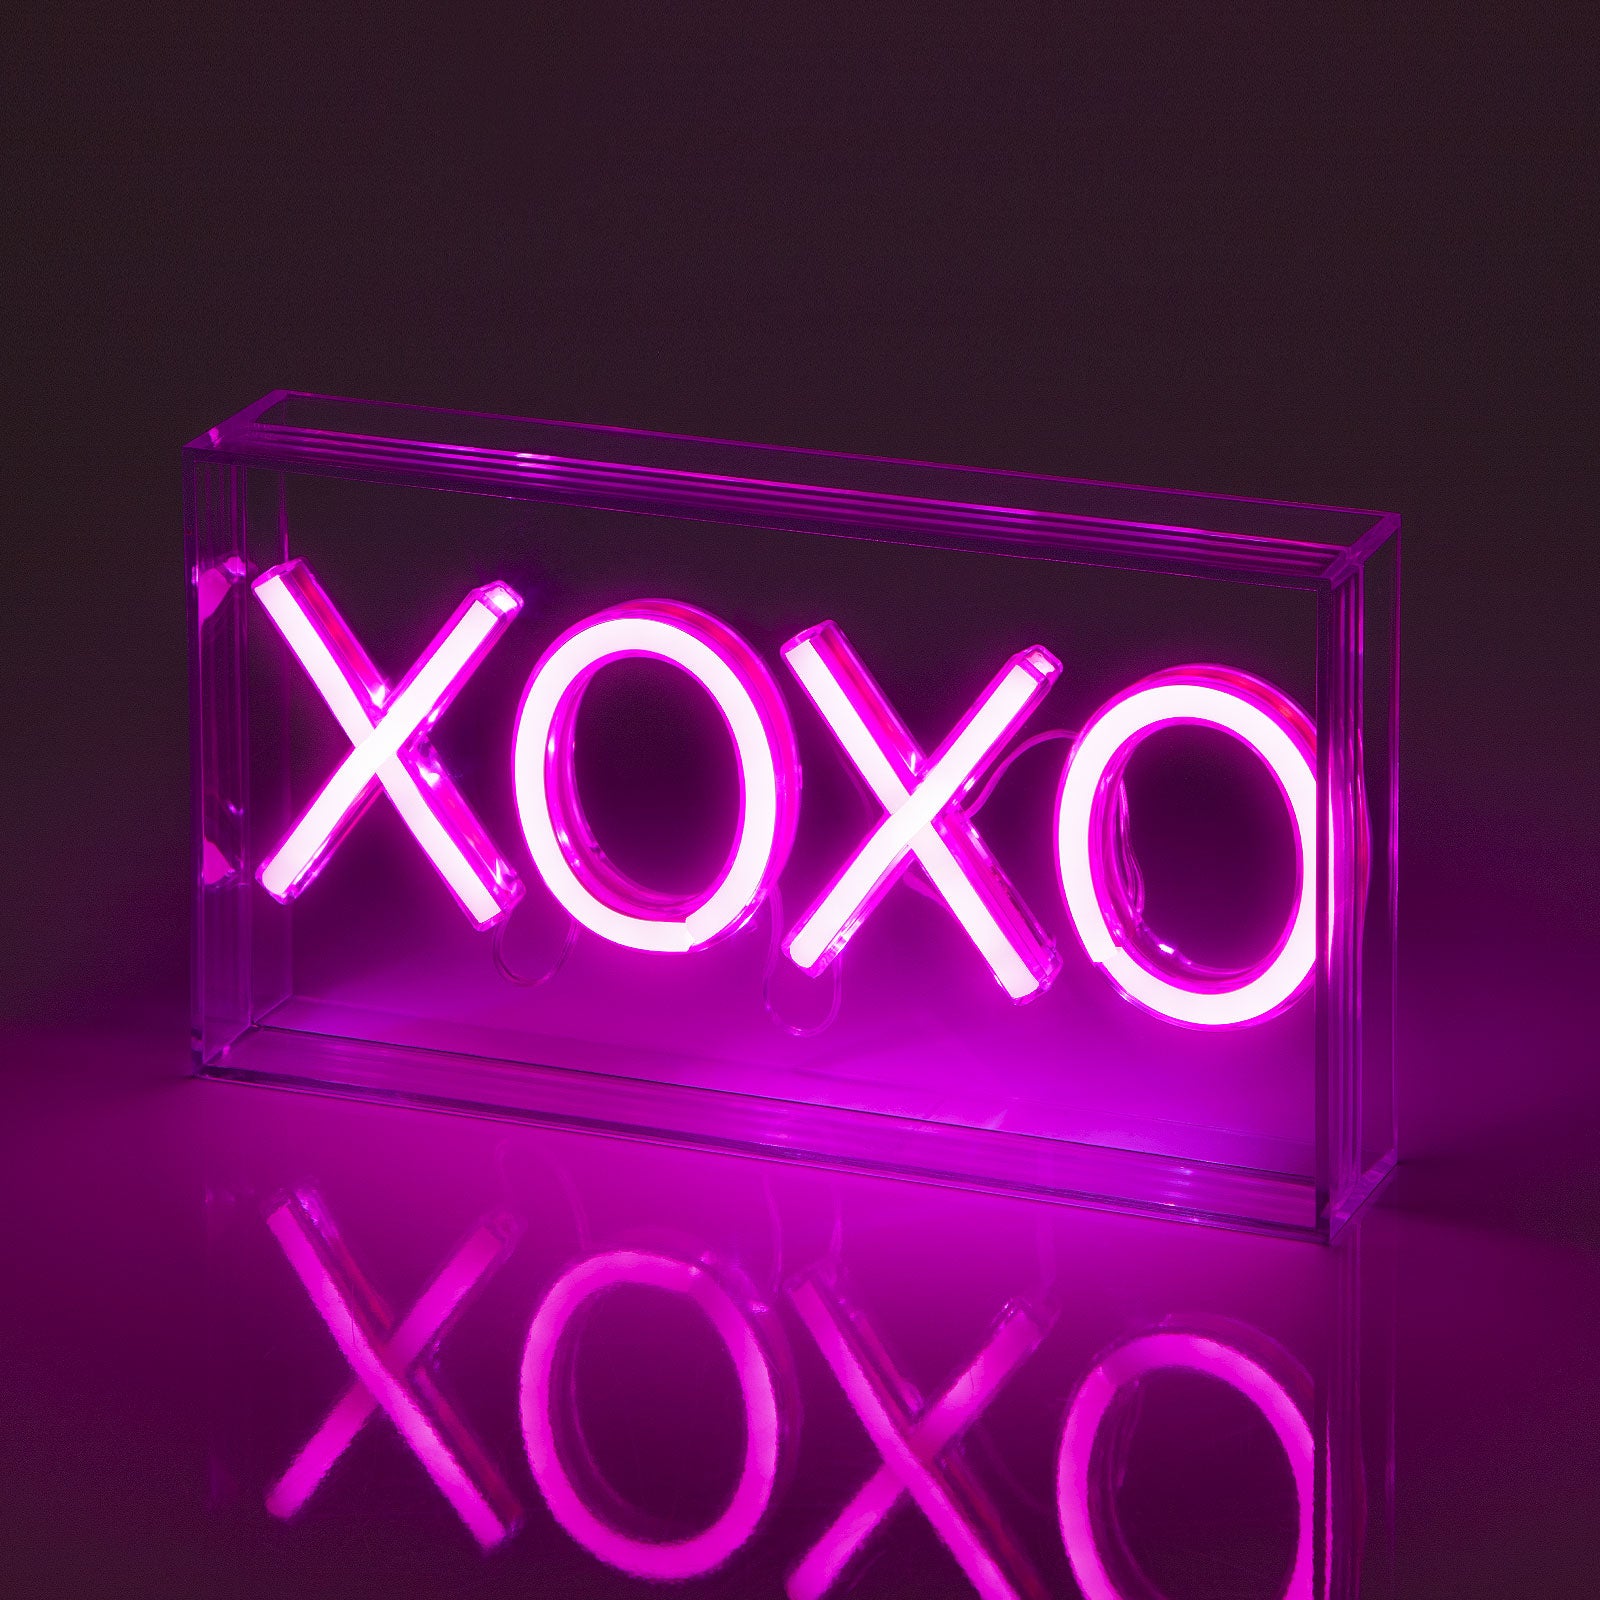 XOXO Acrylic Box LED Neon